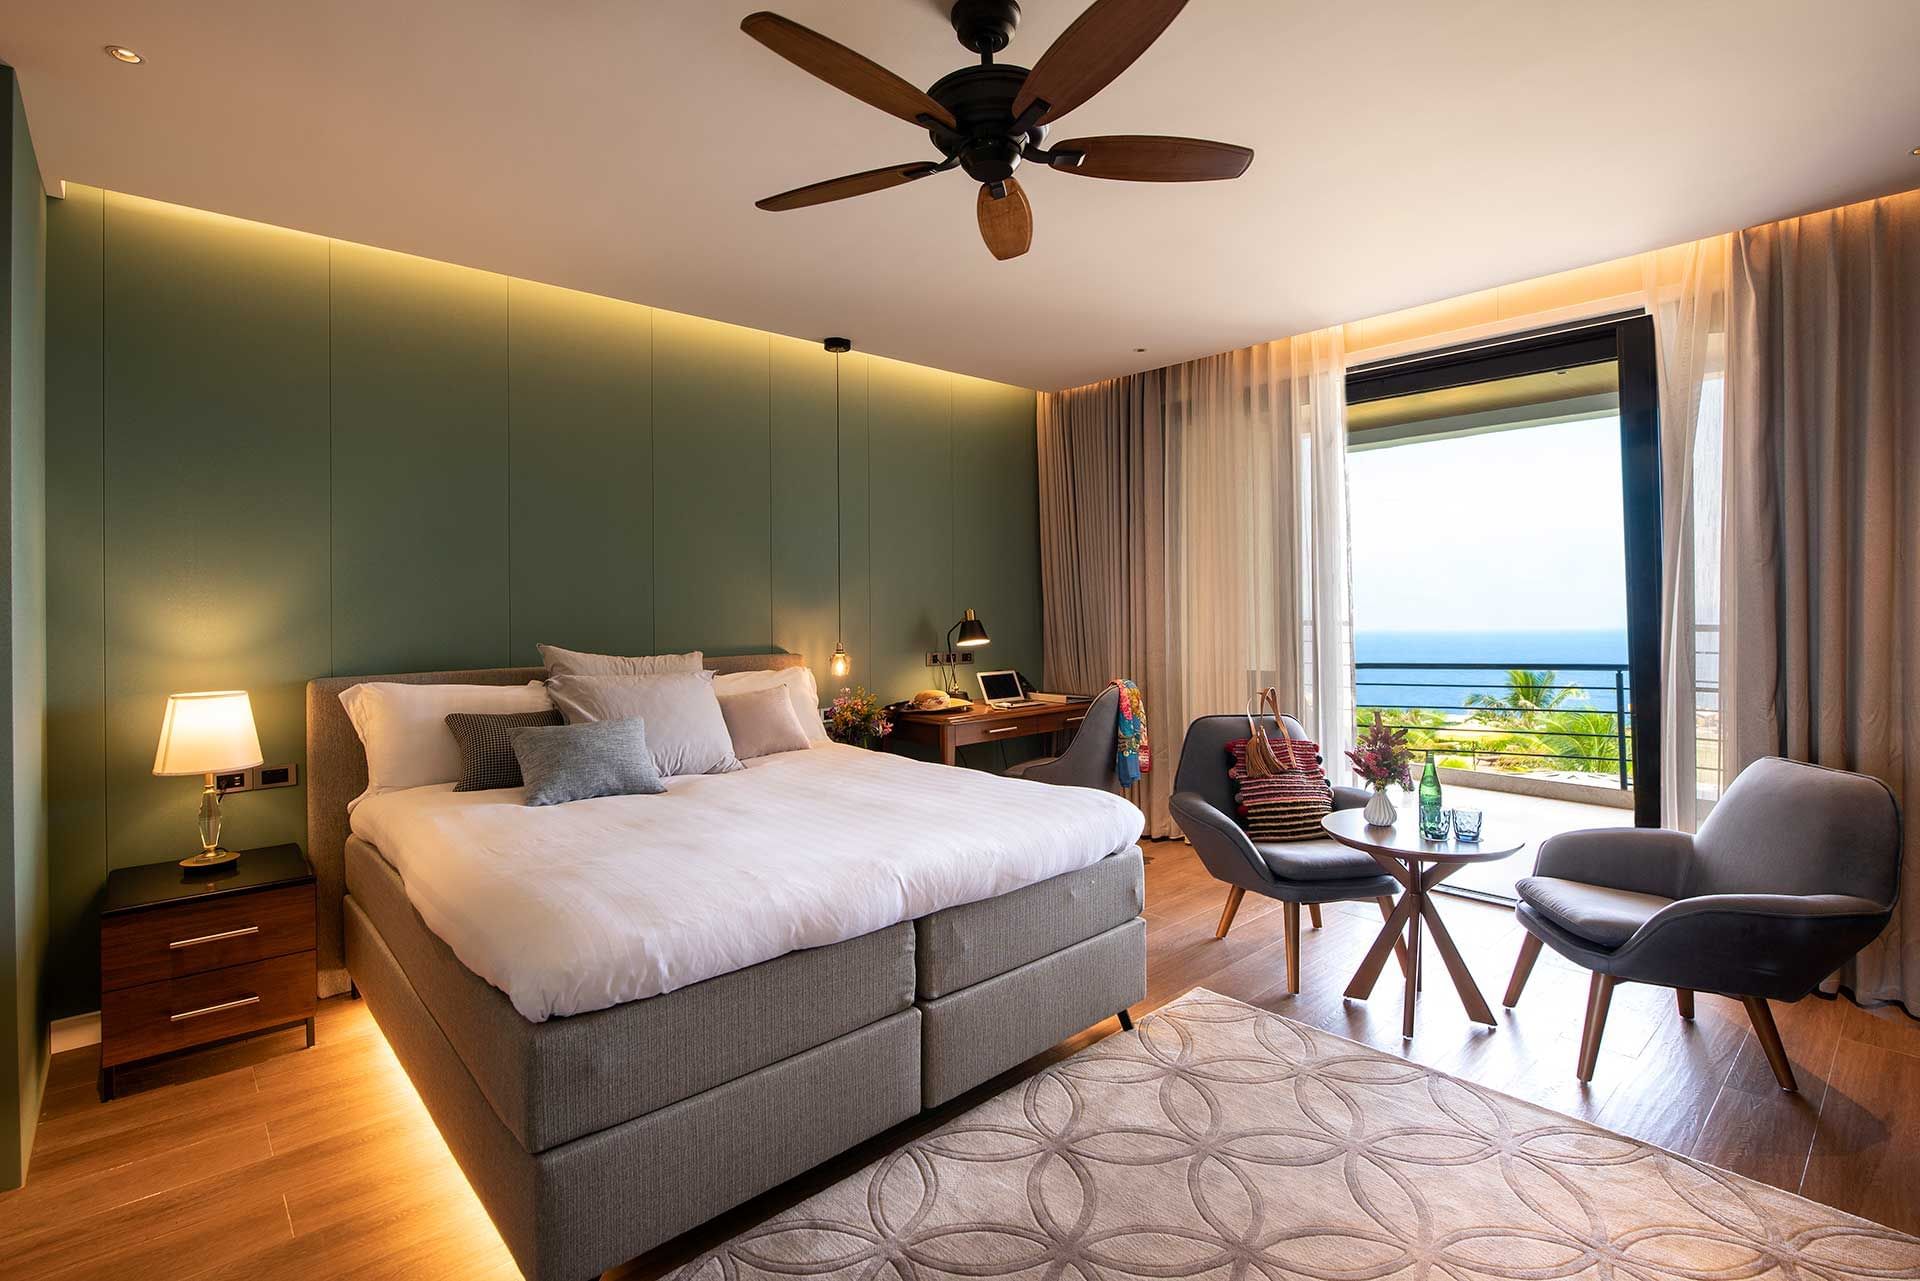 Bed & lounge area in Golden Rock Suites at Golden Rock Resort